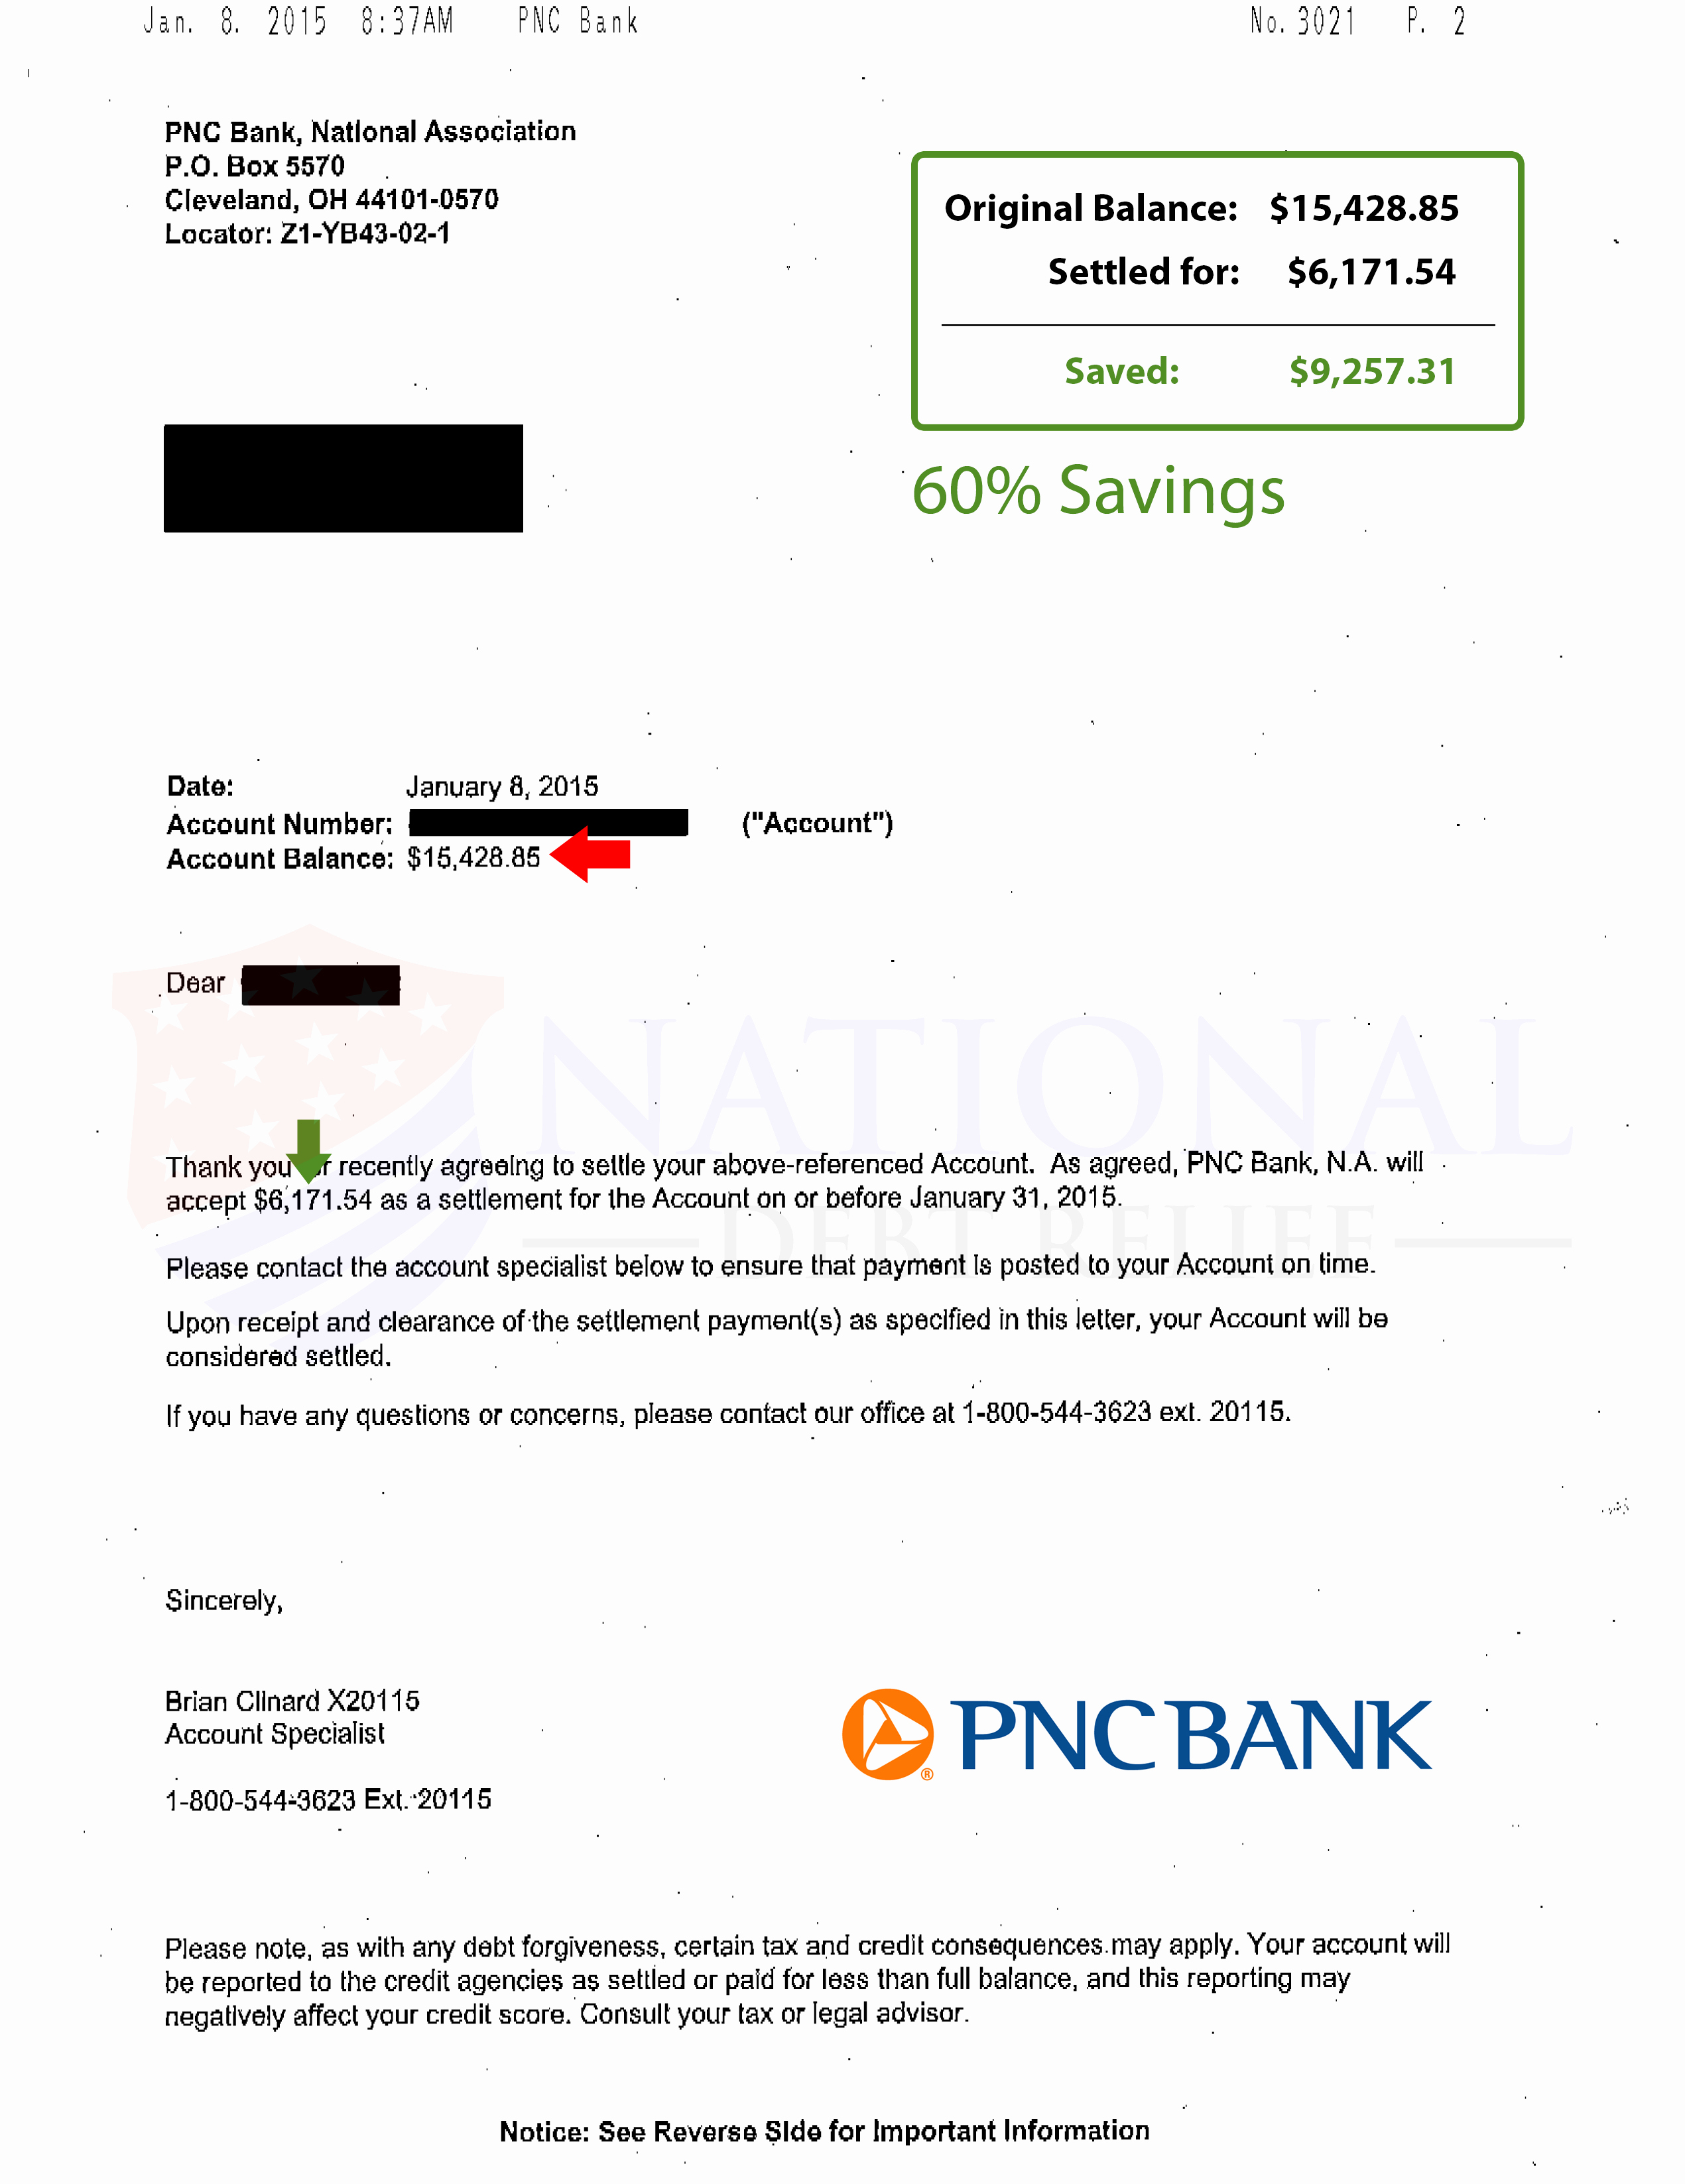 Payment Settlement Letter format Elegant Debt Settlement Letters